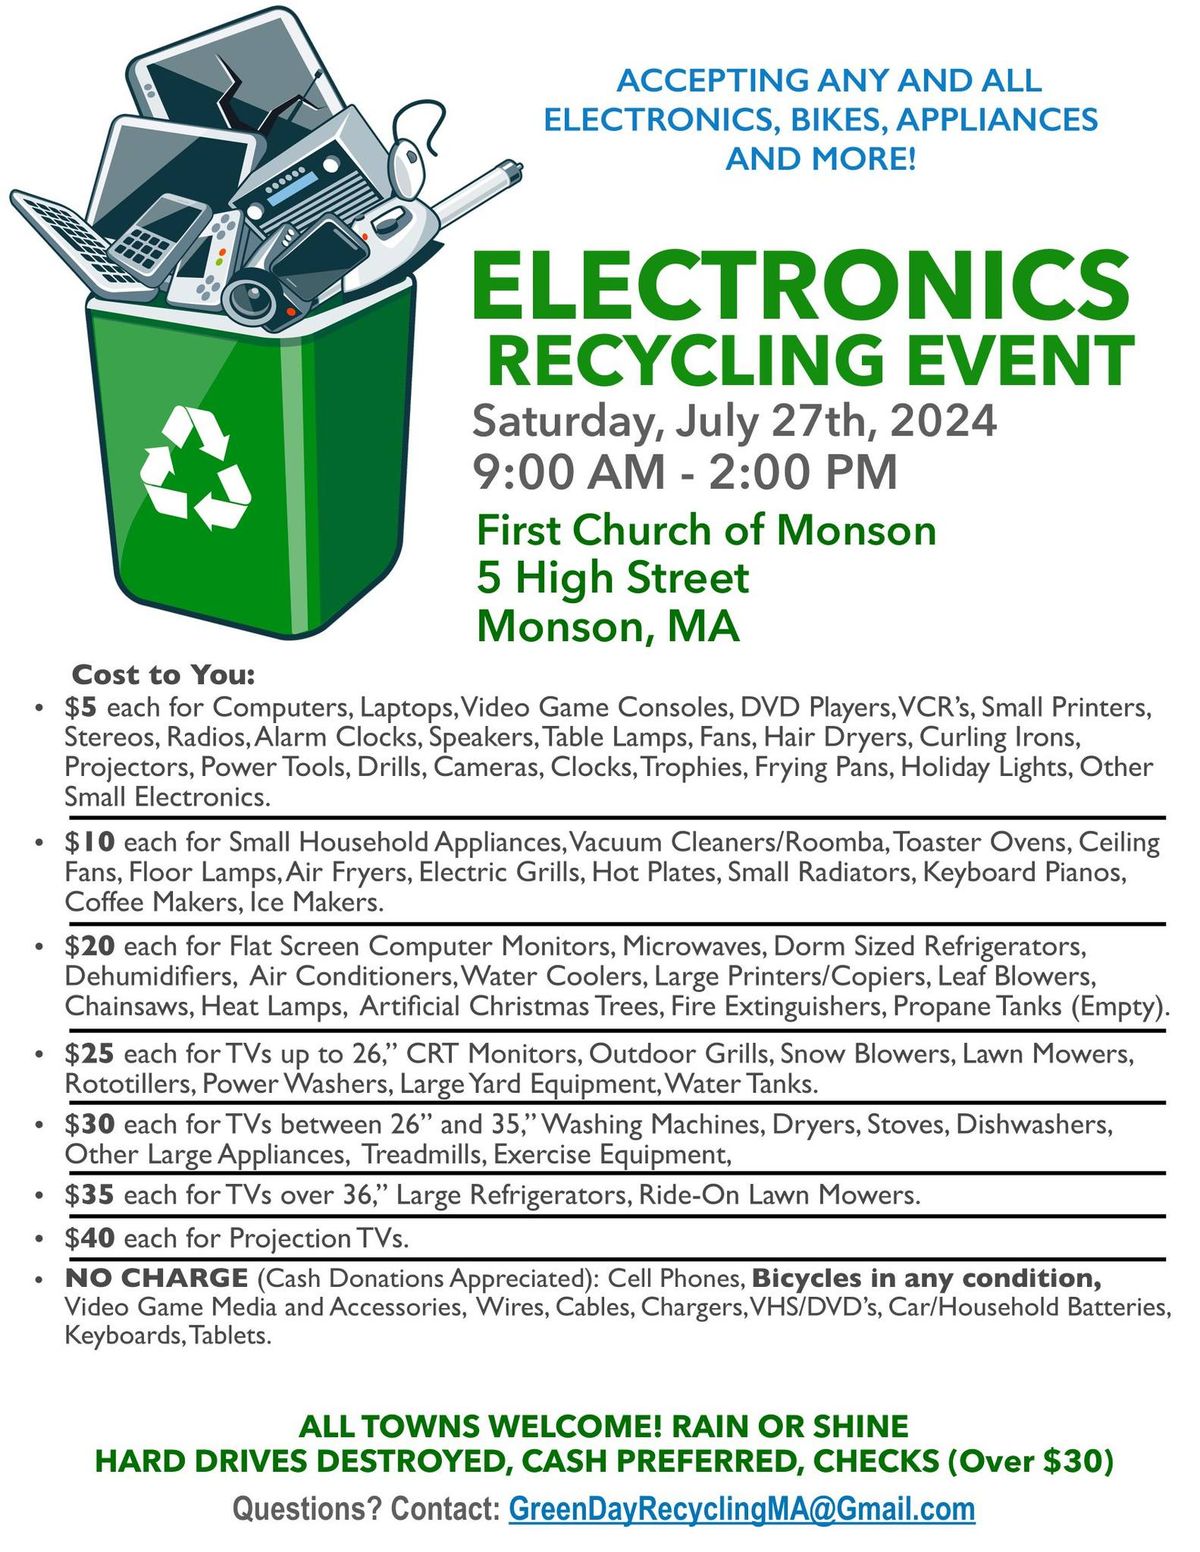 Monson Electronics Recycling Event